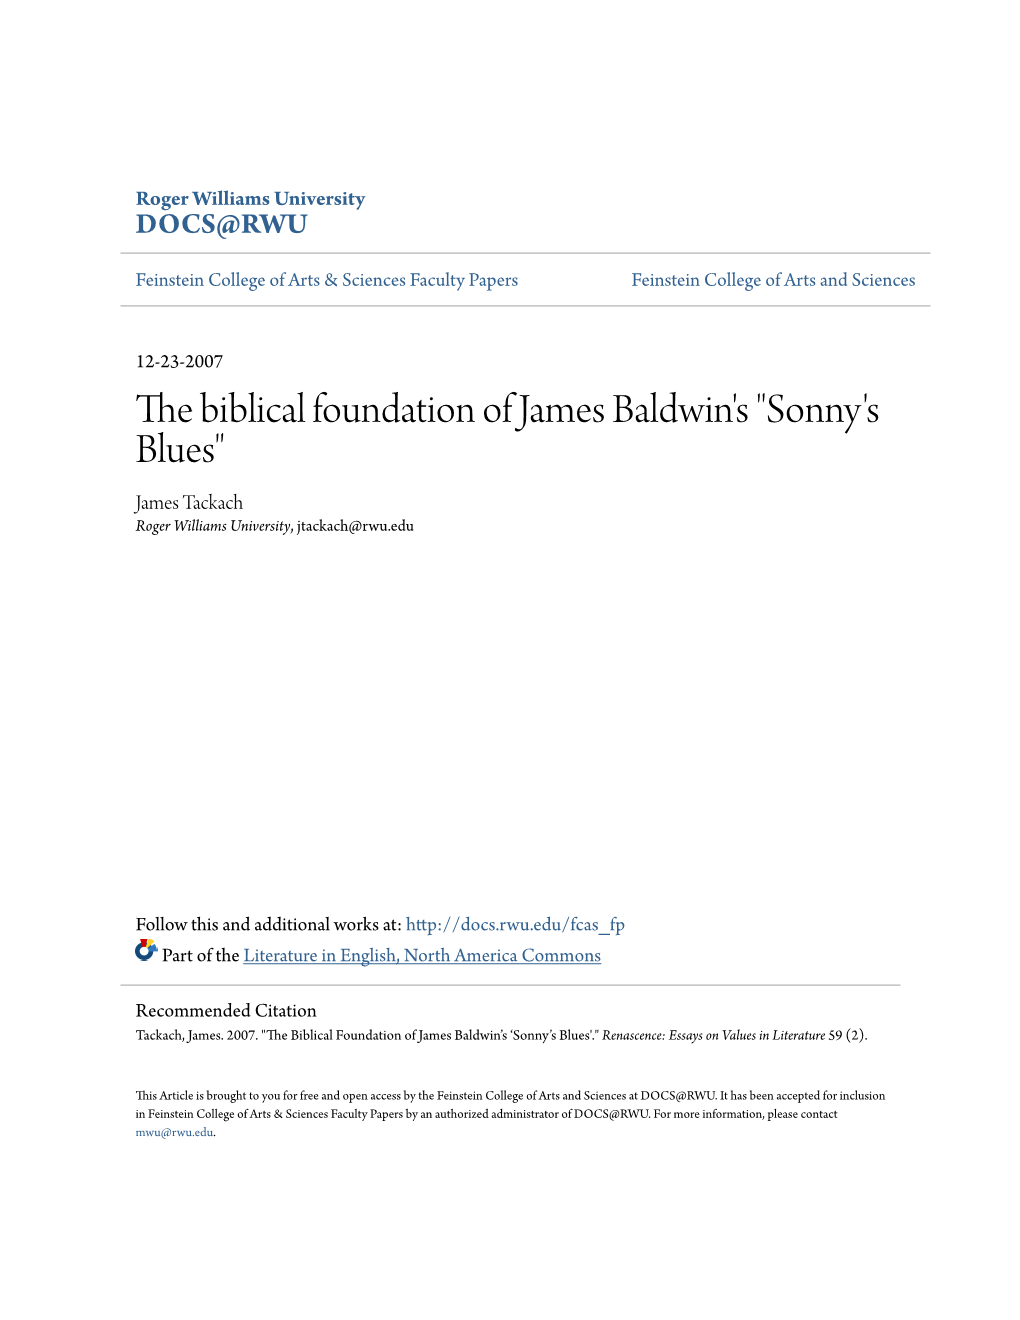 The Biblical Foundation of James Baldwin's "Sonny's Blues" James Tackach Roger Williams University, Jtackach@Rwu.Edu